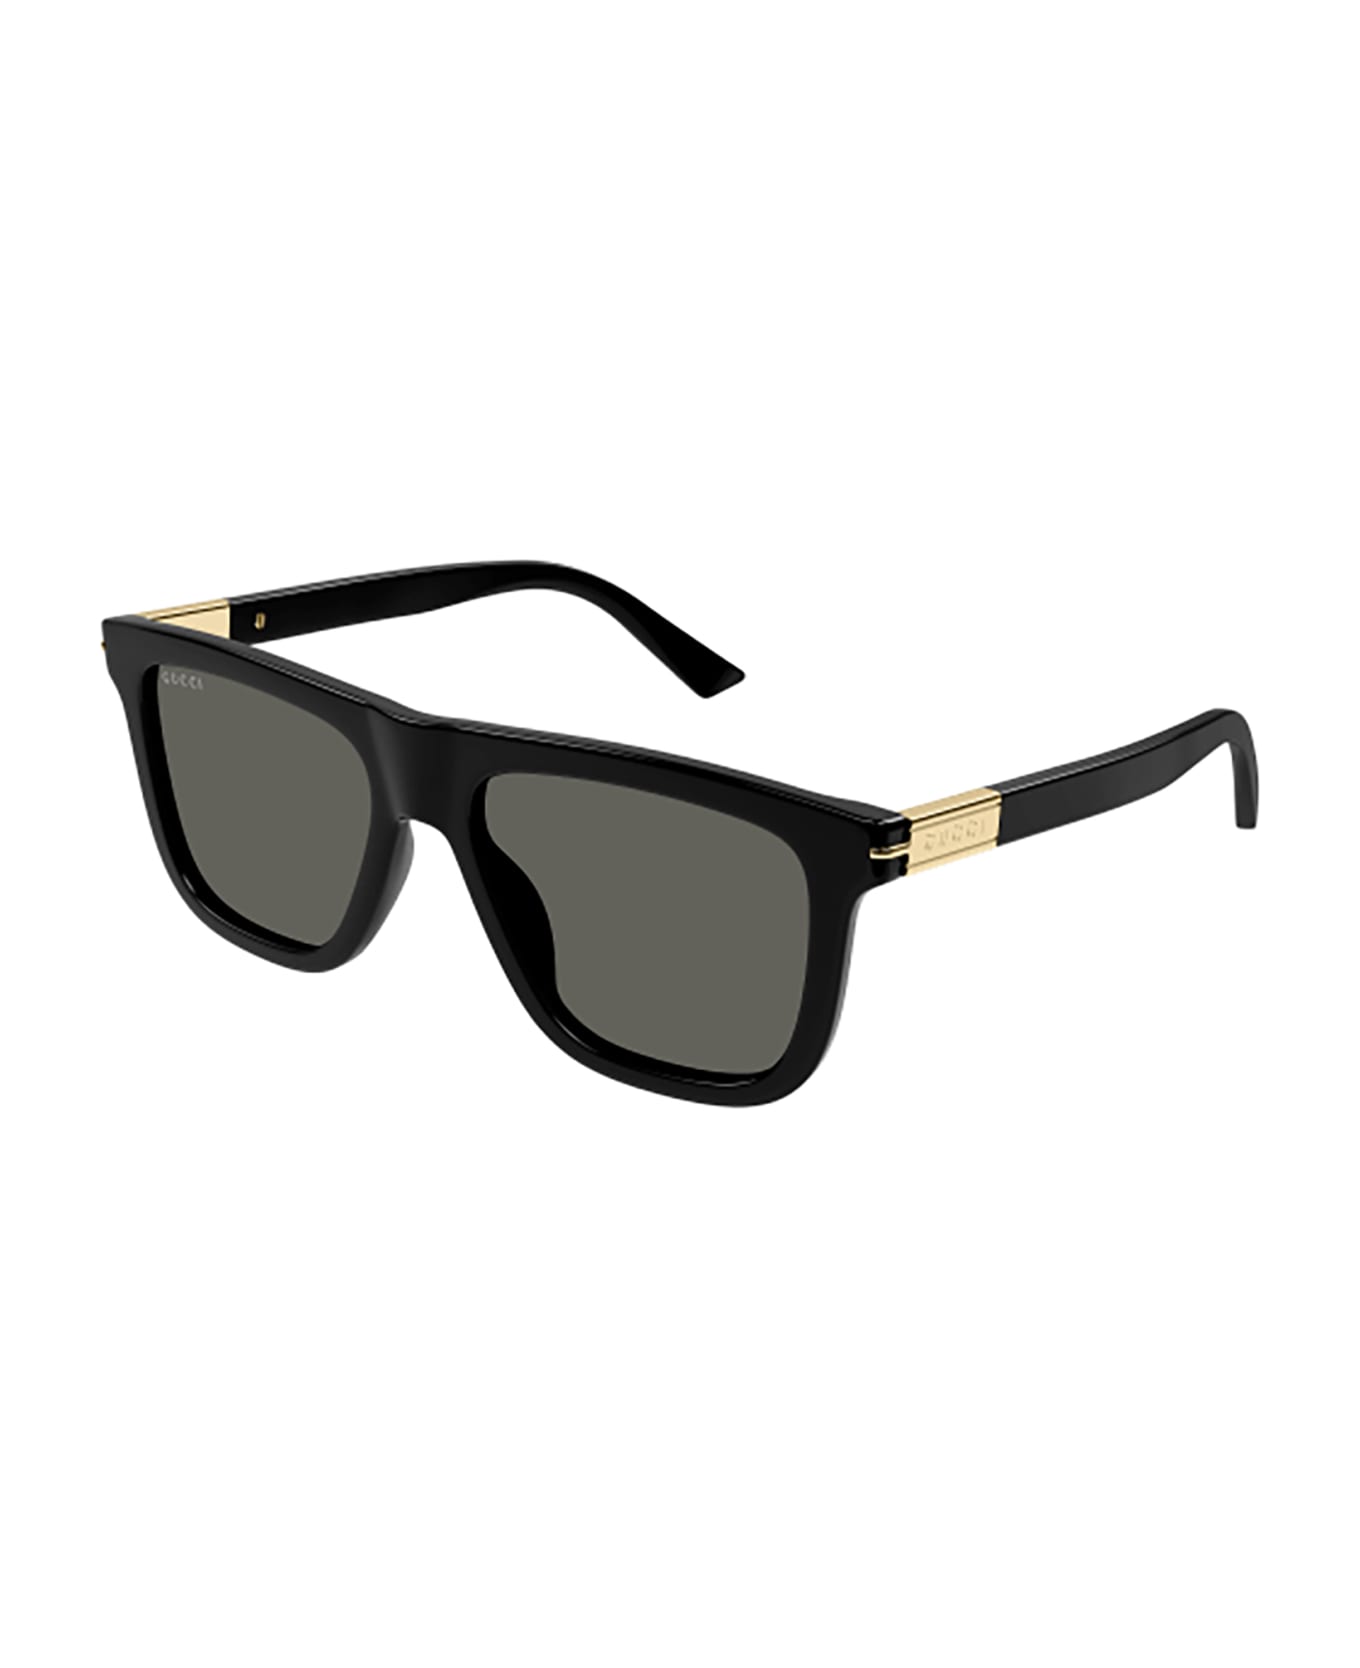 Gucci Eyewear GG1502S Sunglasses - Black Black Grey サングラス